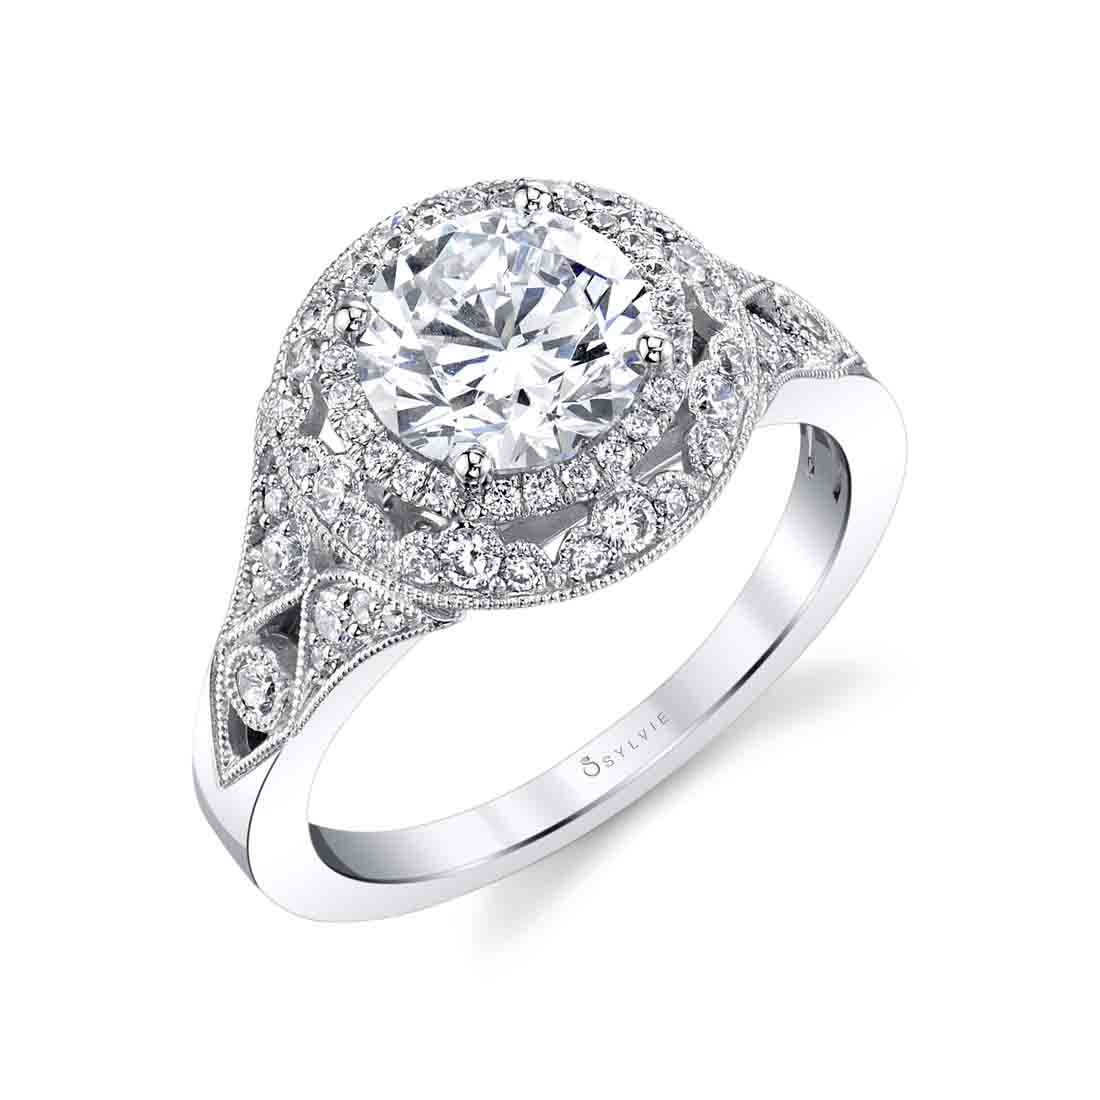 Vintage Inspired Engagement Ring - Jade Stuart Benjamin & Co. Jewelry Designs San Diego, CA